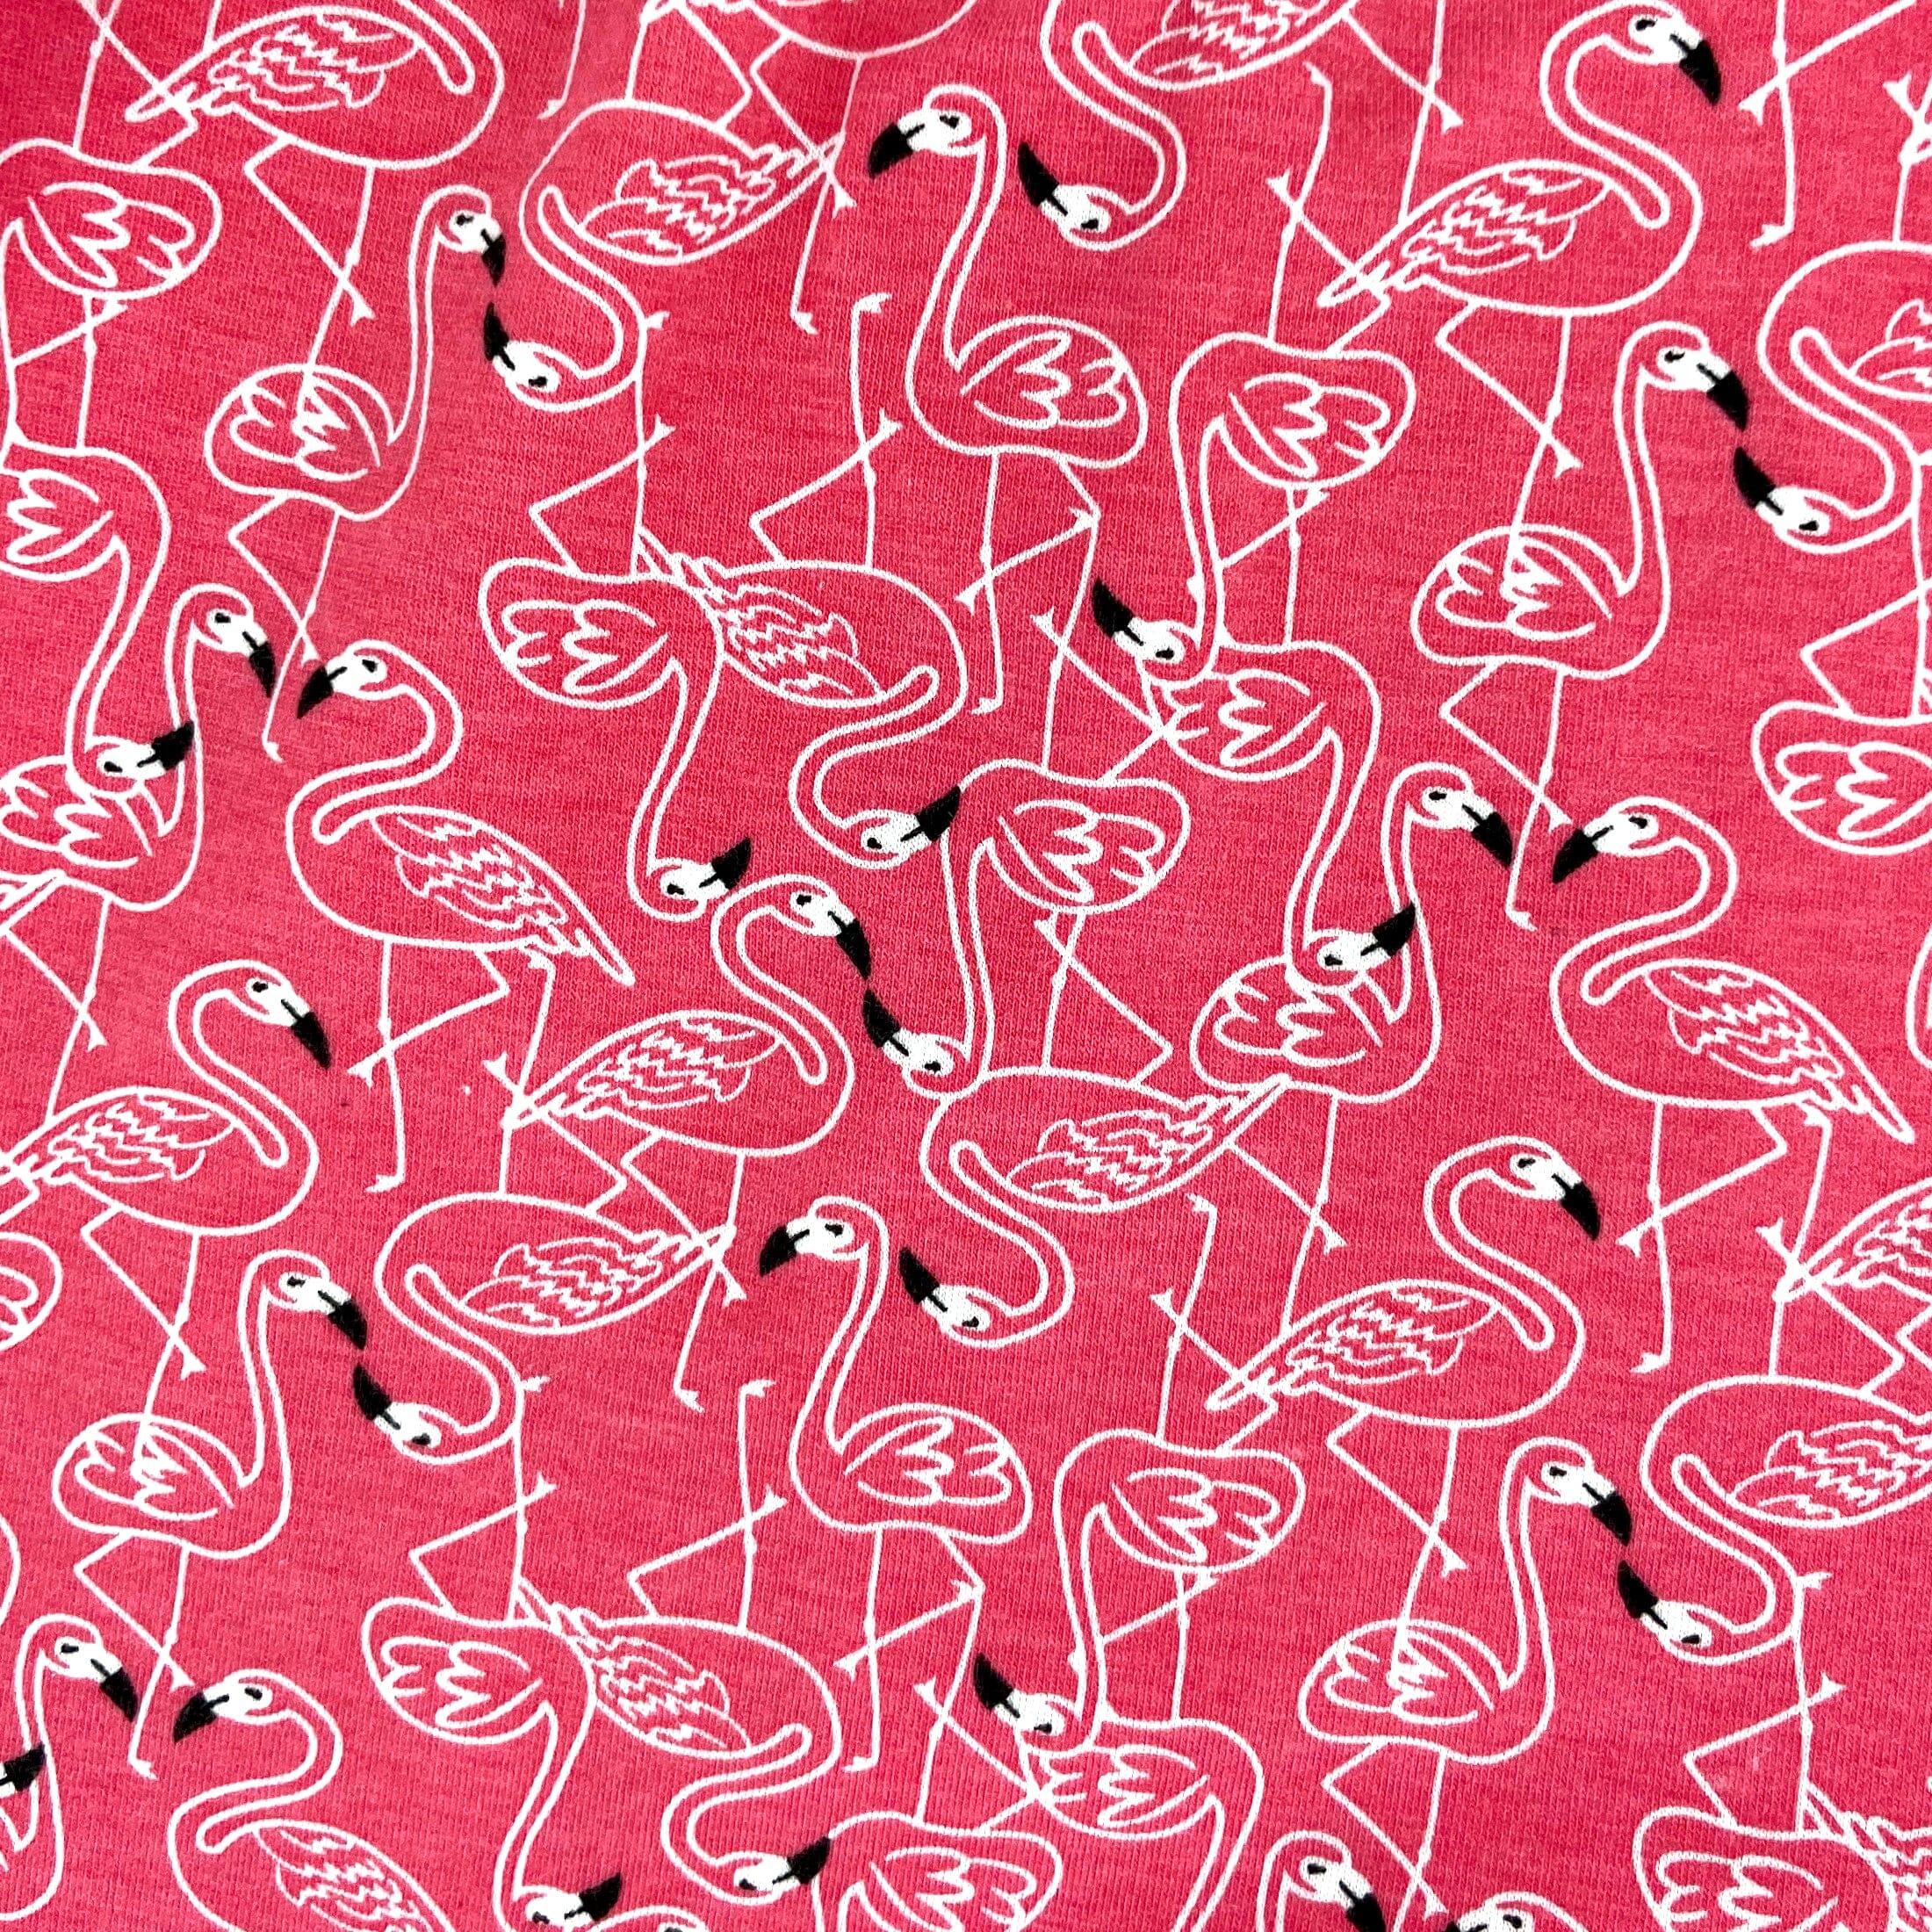 Men's Bright Colorful Flamingo Patterned Cotton Boxer Pyjama Shorts